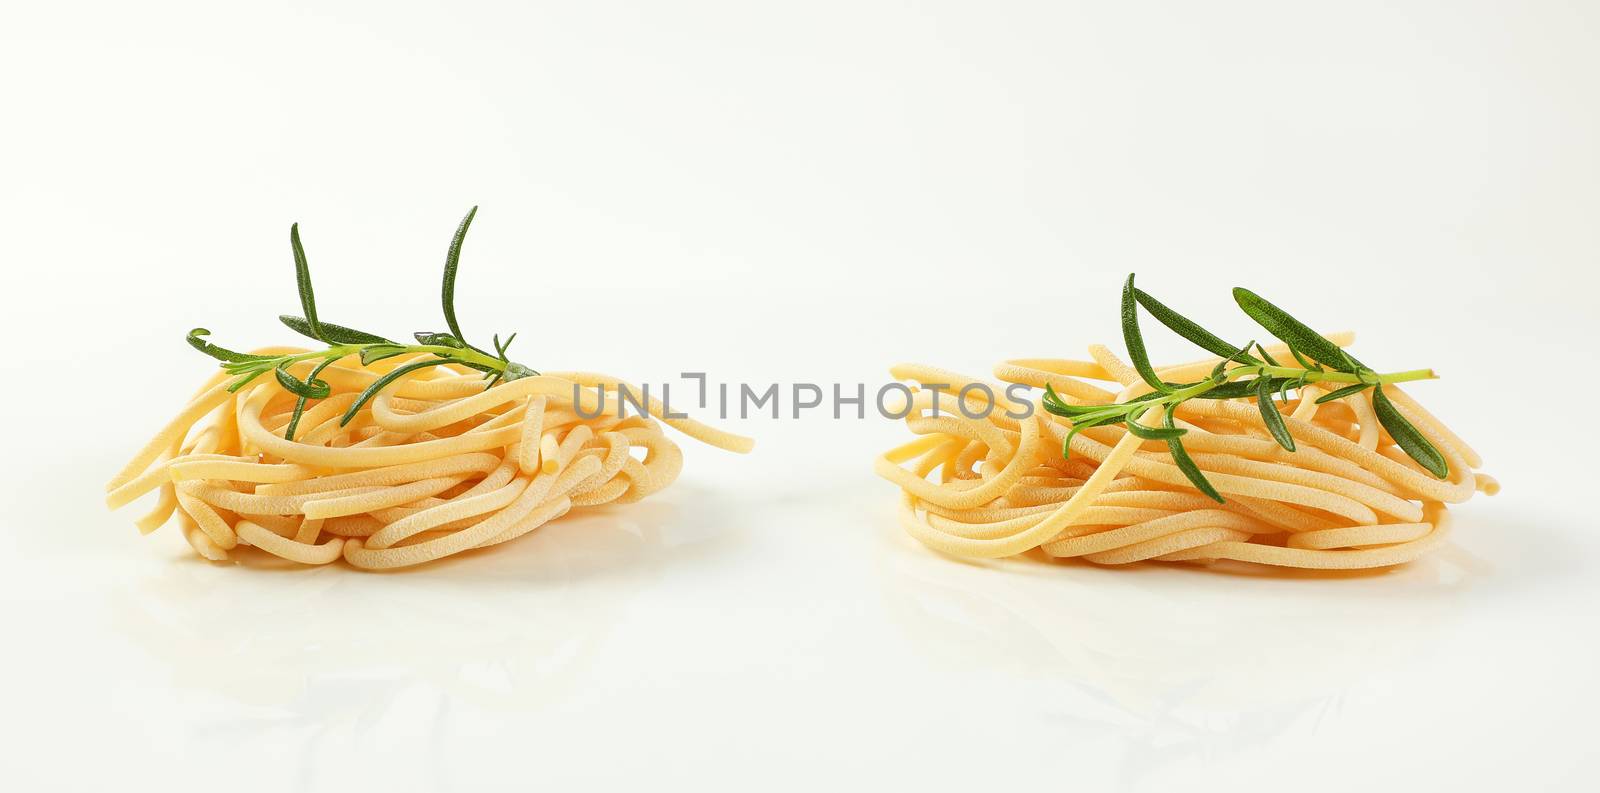 two bundles of uncooked spaghetti pasta on white background